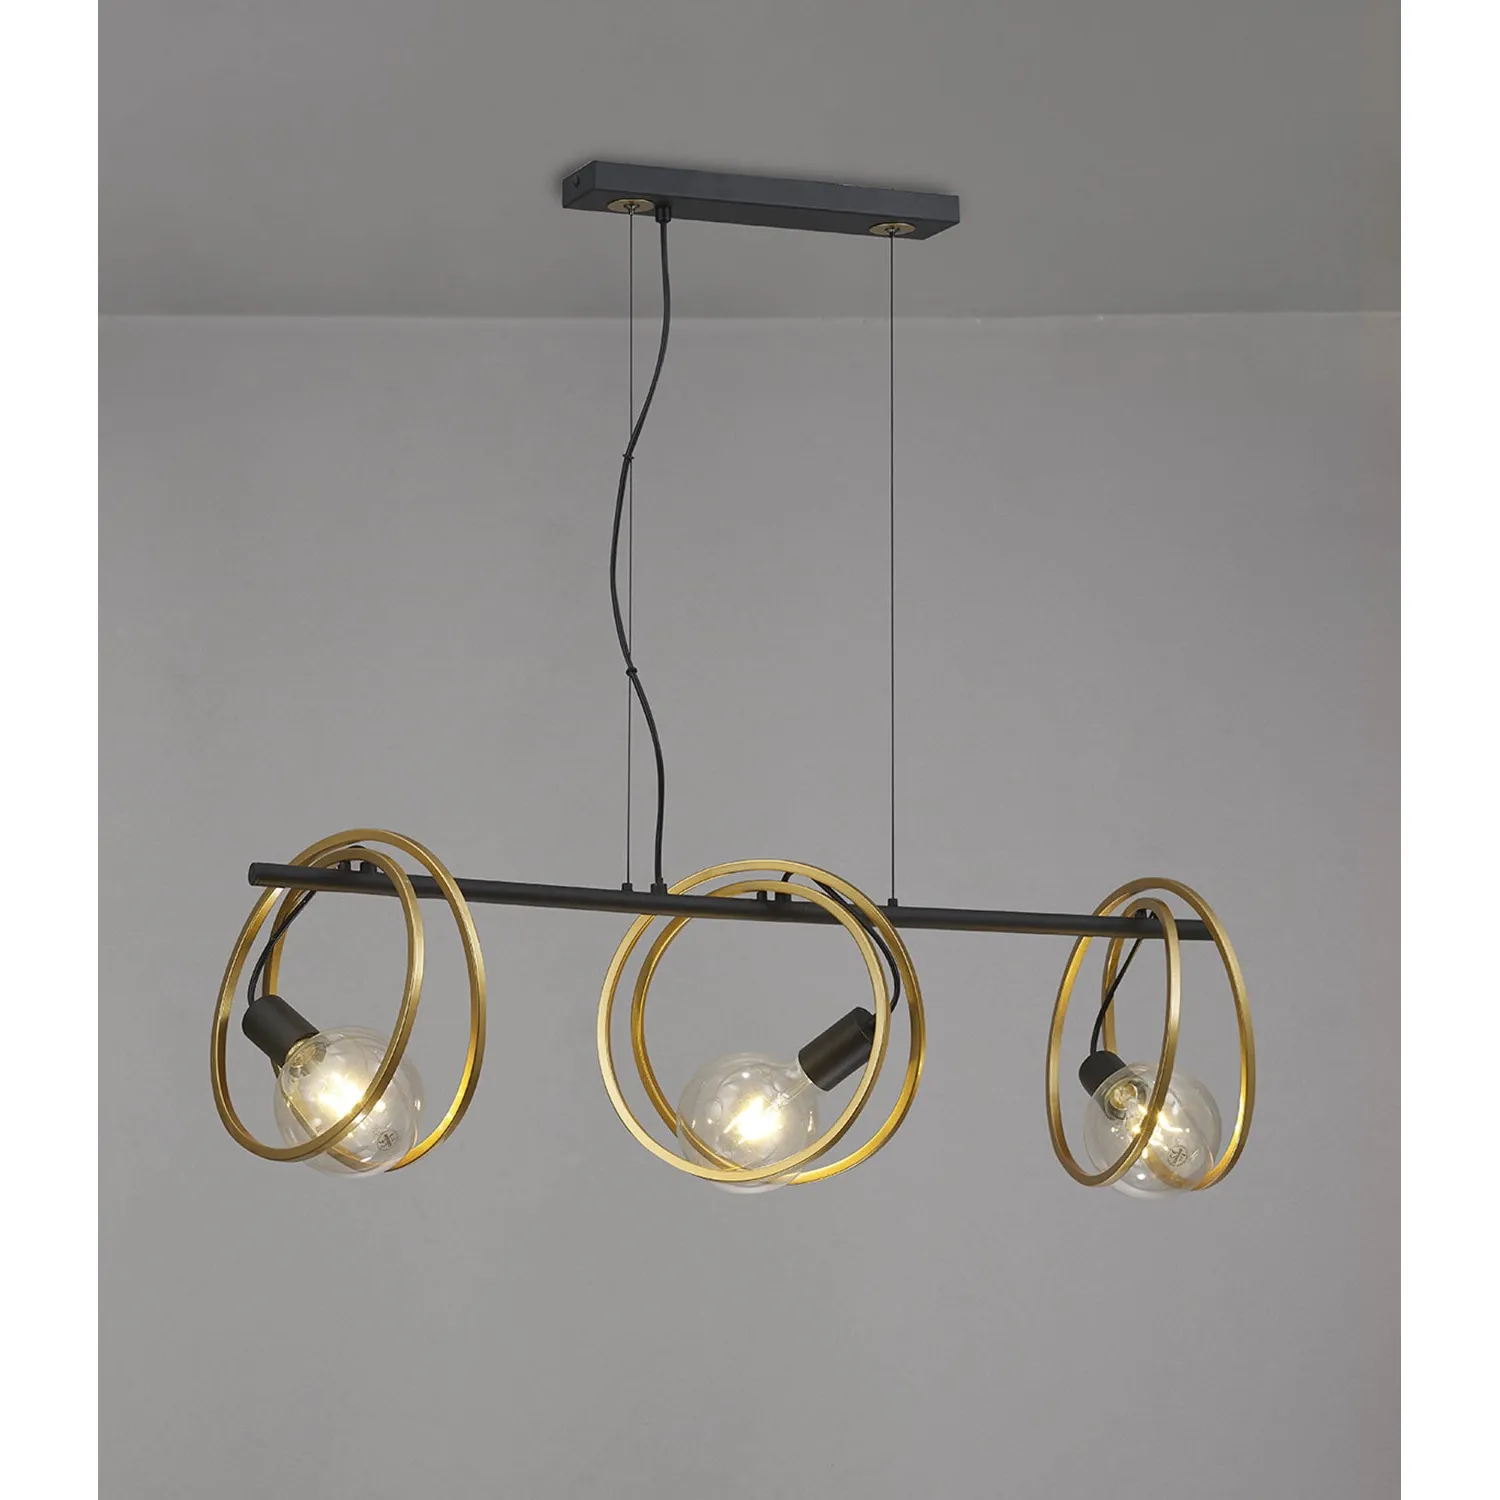 Battersea Double Ring Linear Pendant, 3 Light E27, Matt Black Painted Gold, G95 120 Lamp Recommended